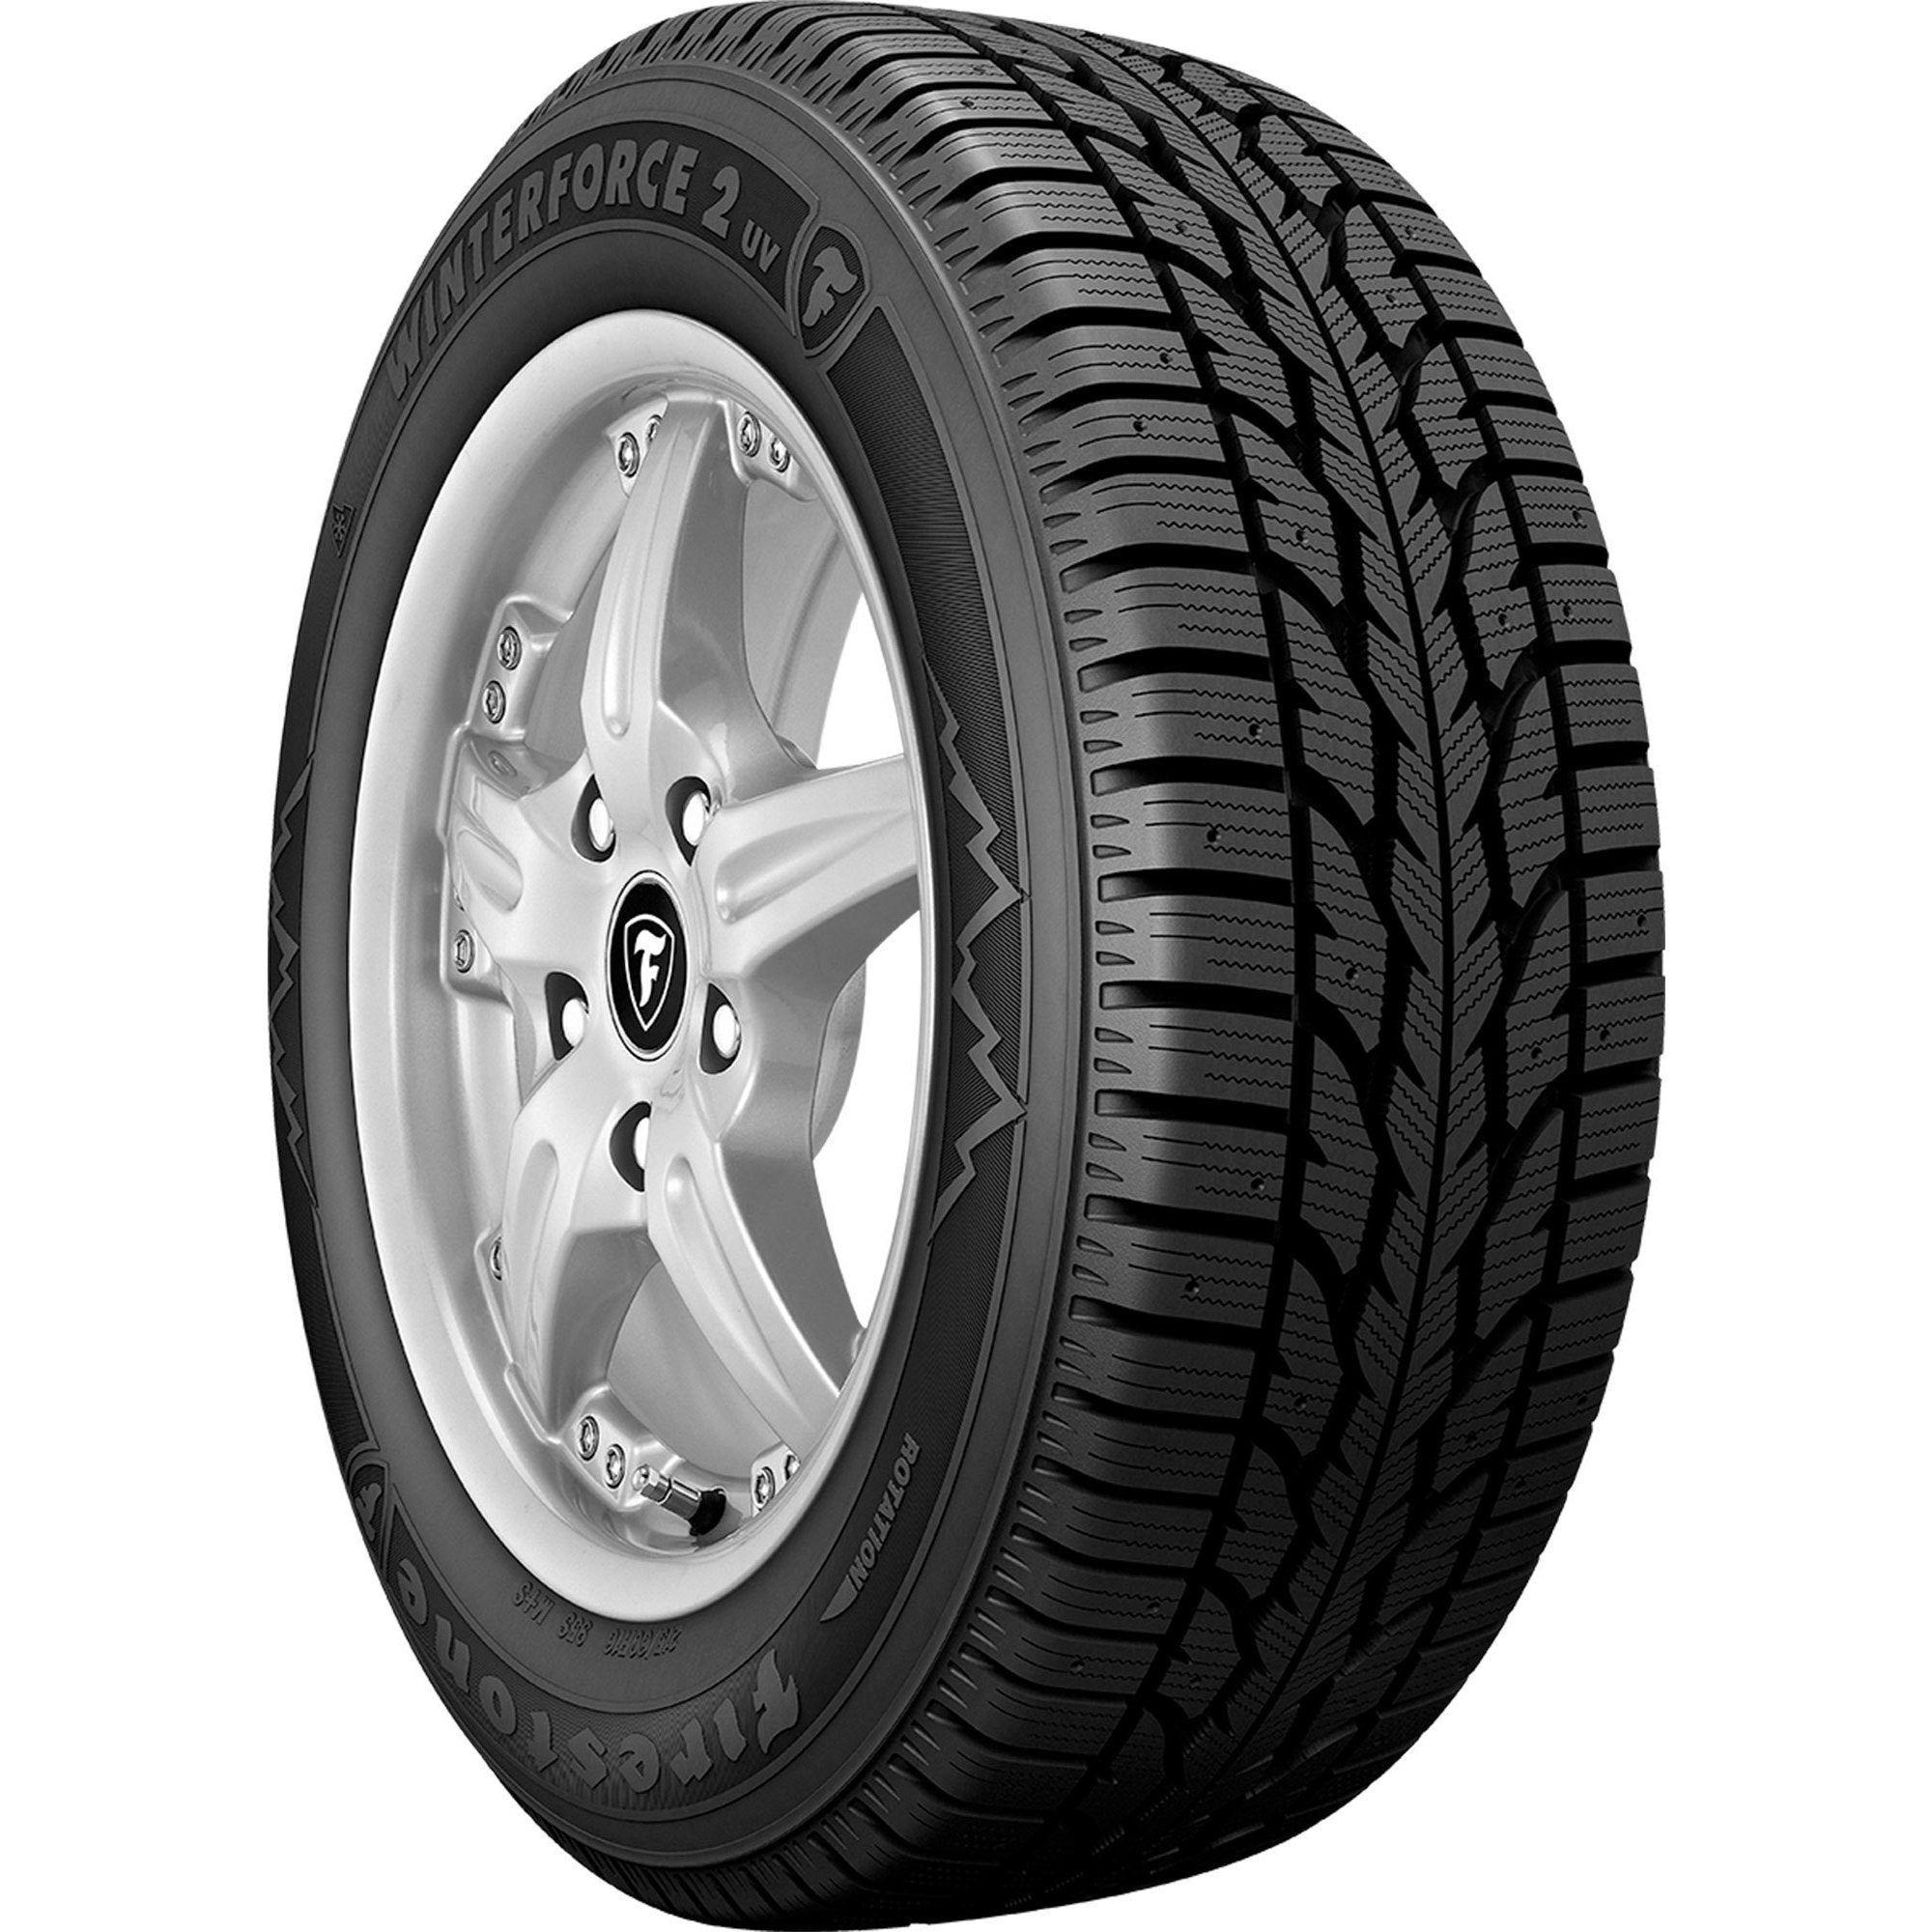 FIRESTONE WINTERFORCE2 UV 215/70R16 (27.9X8.5R 16) Tires